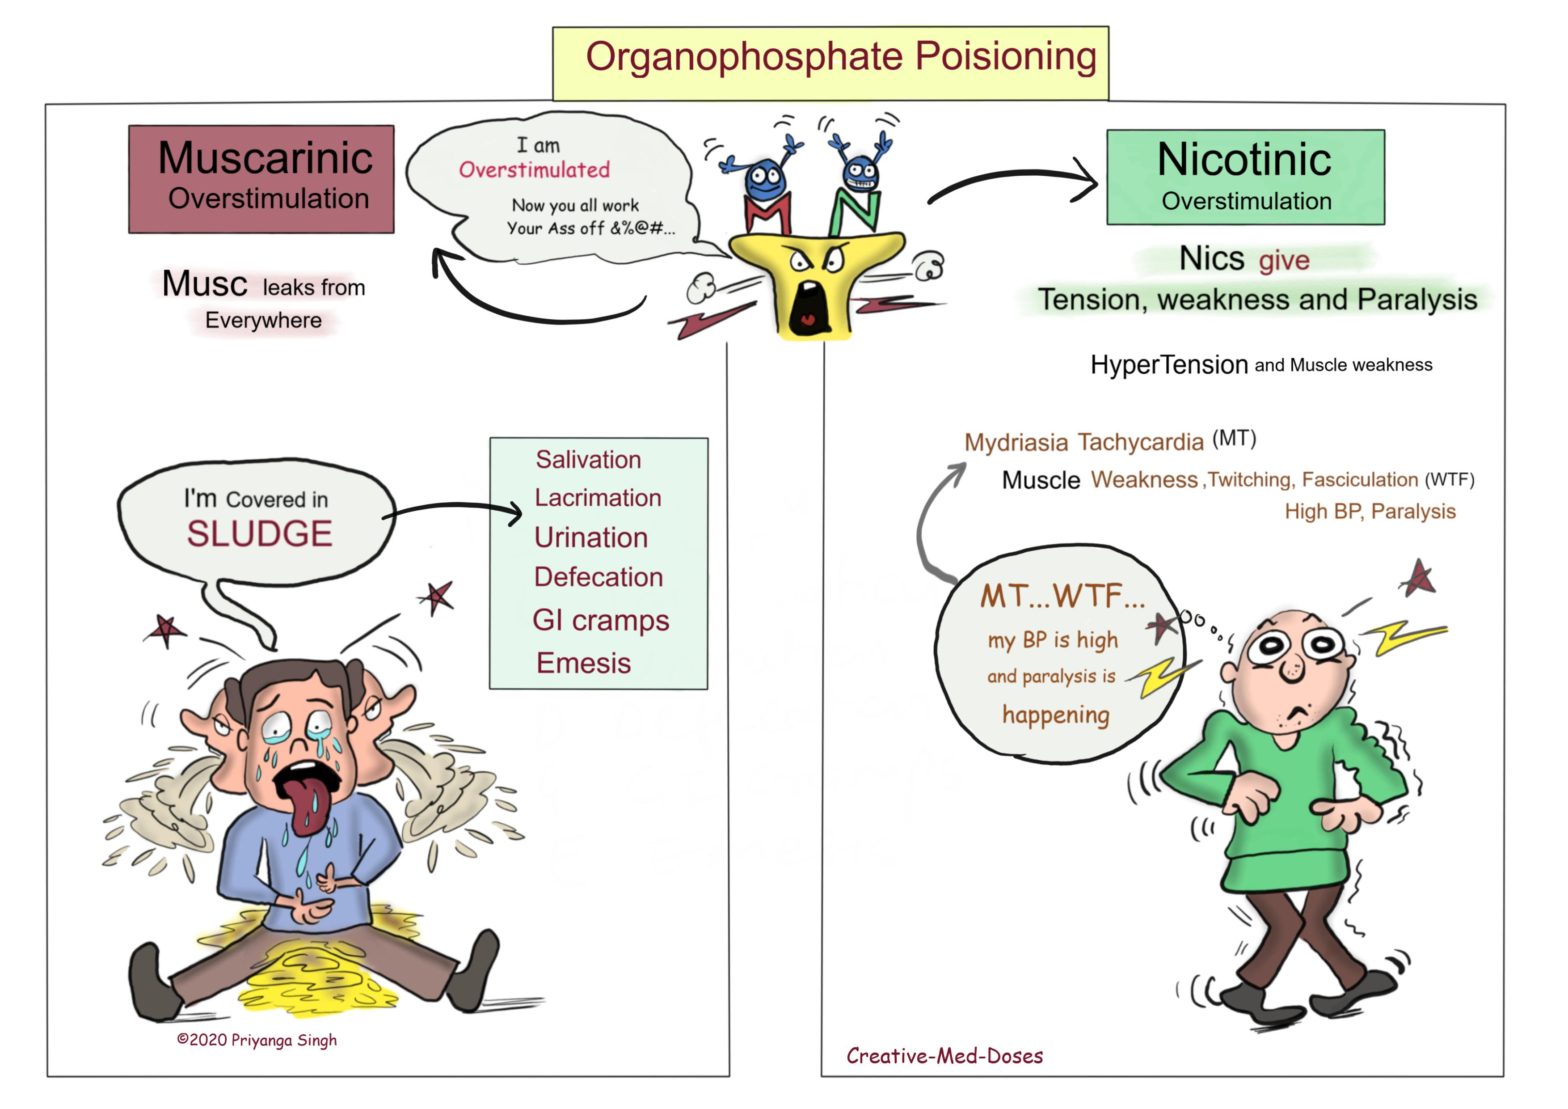 atropine antidote for organophosphate poisoning